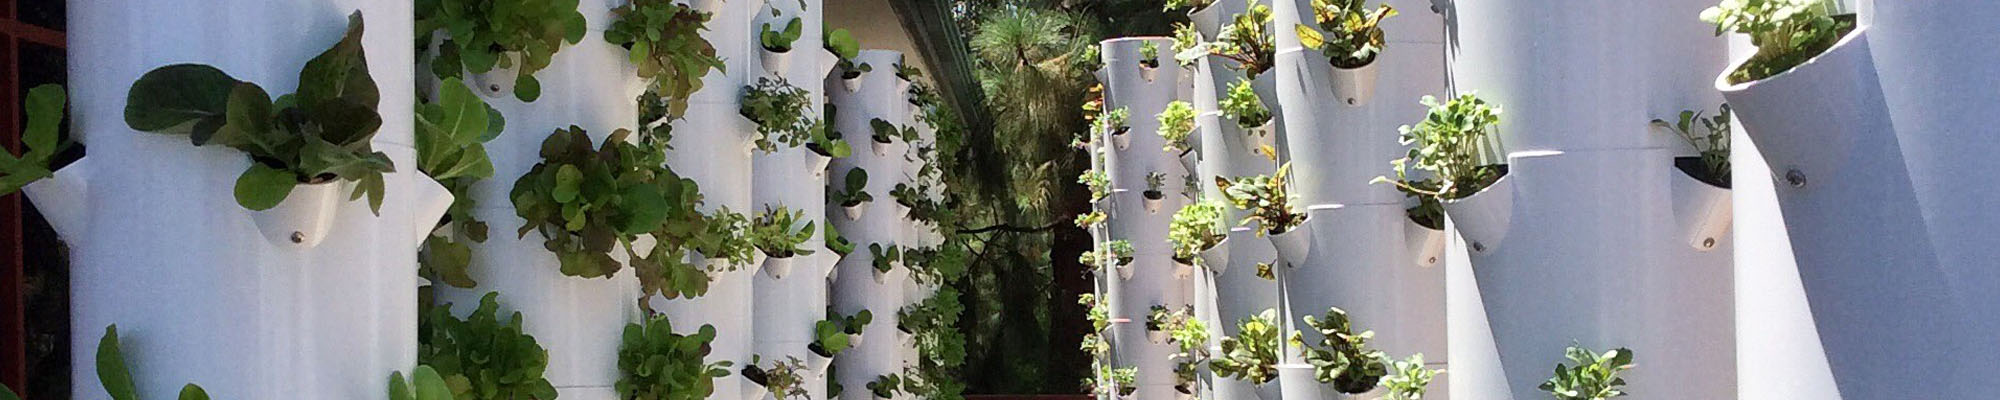 Vertical hydroponic garden at SDSU faculty/staff club